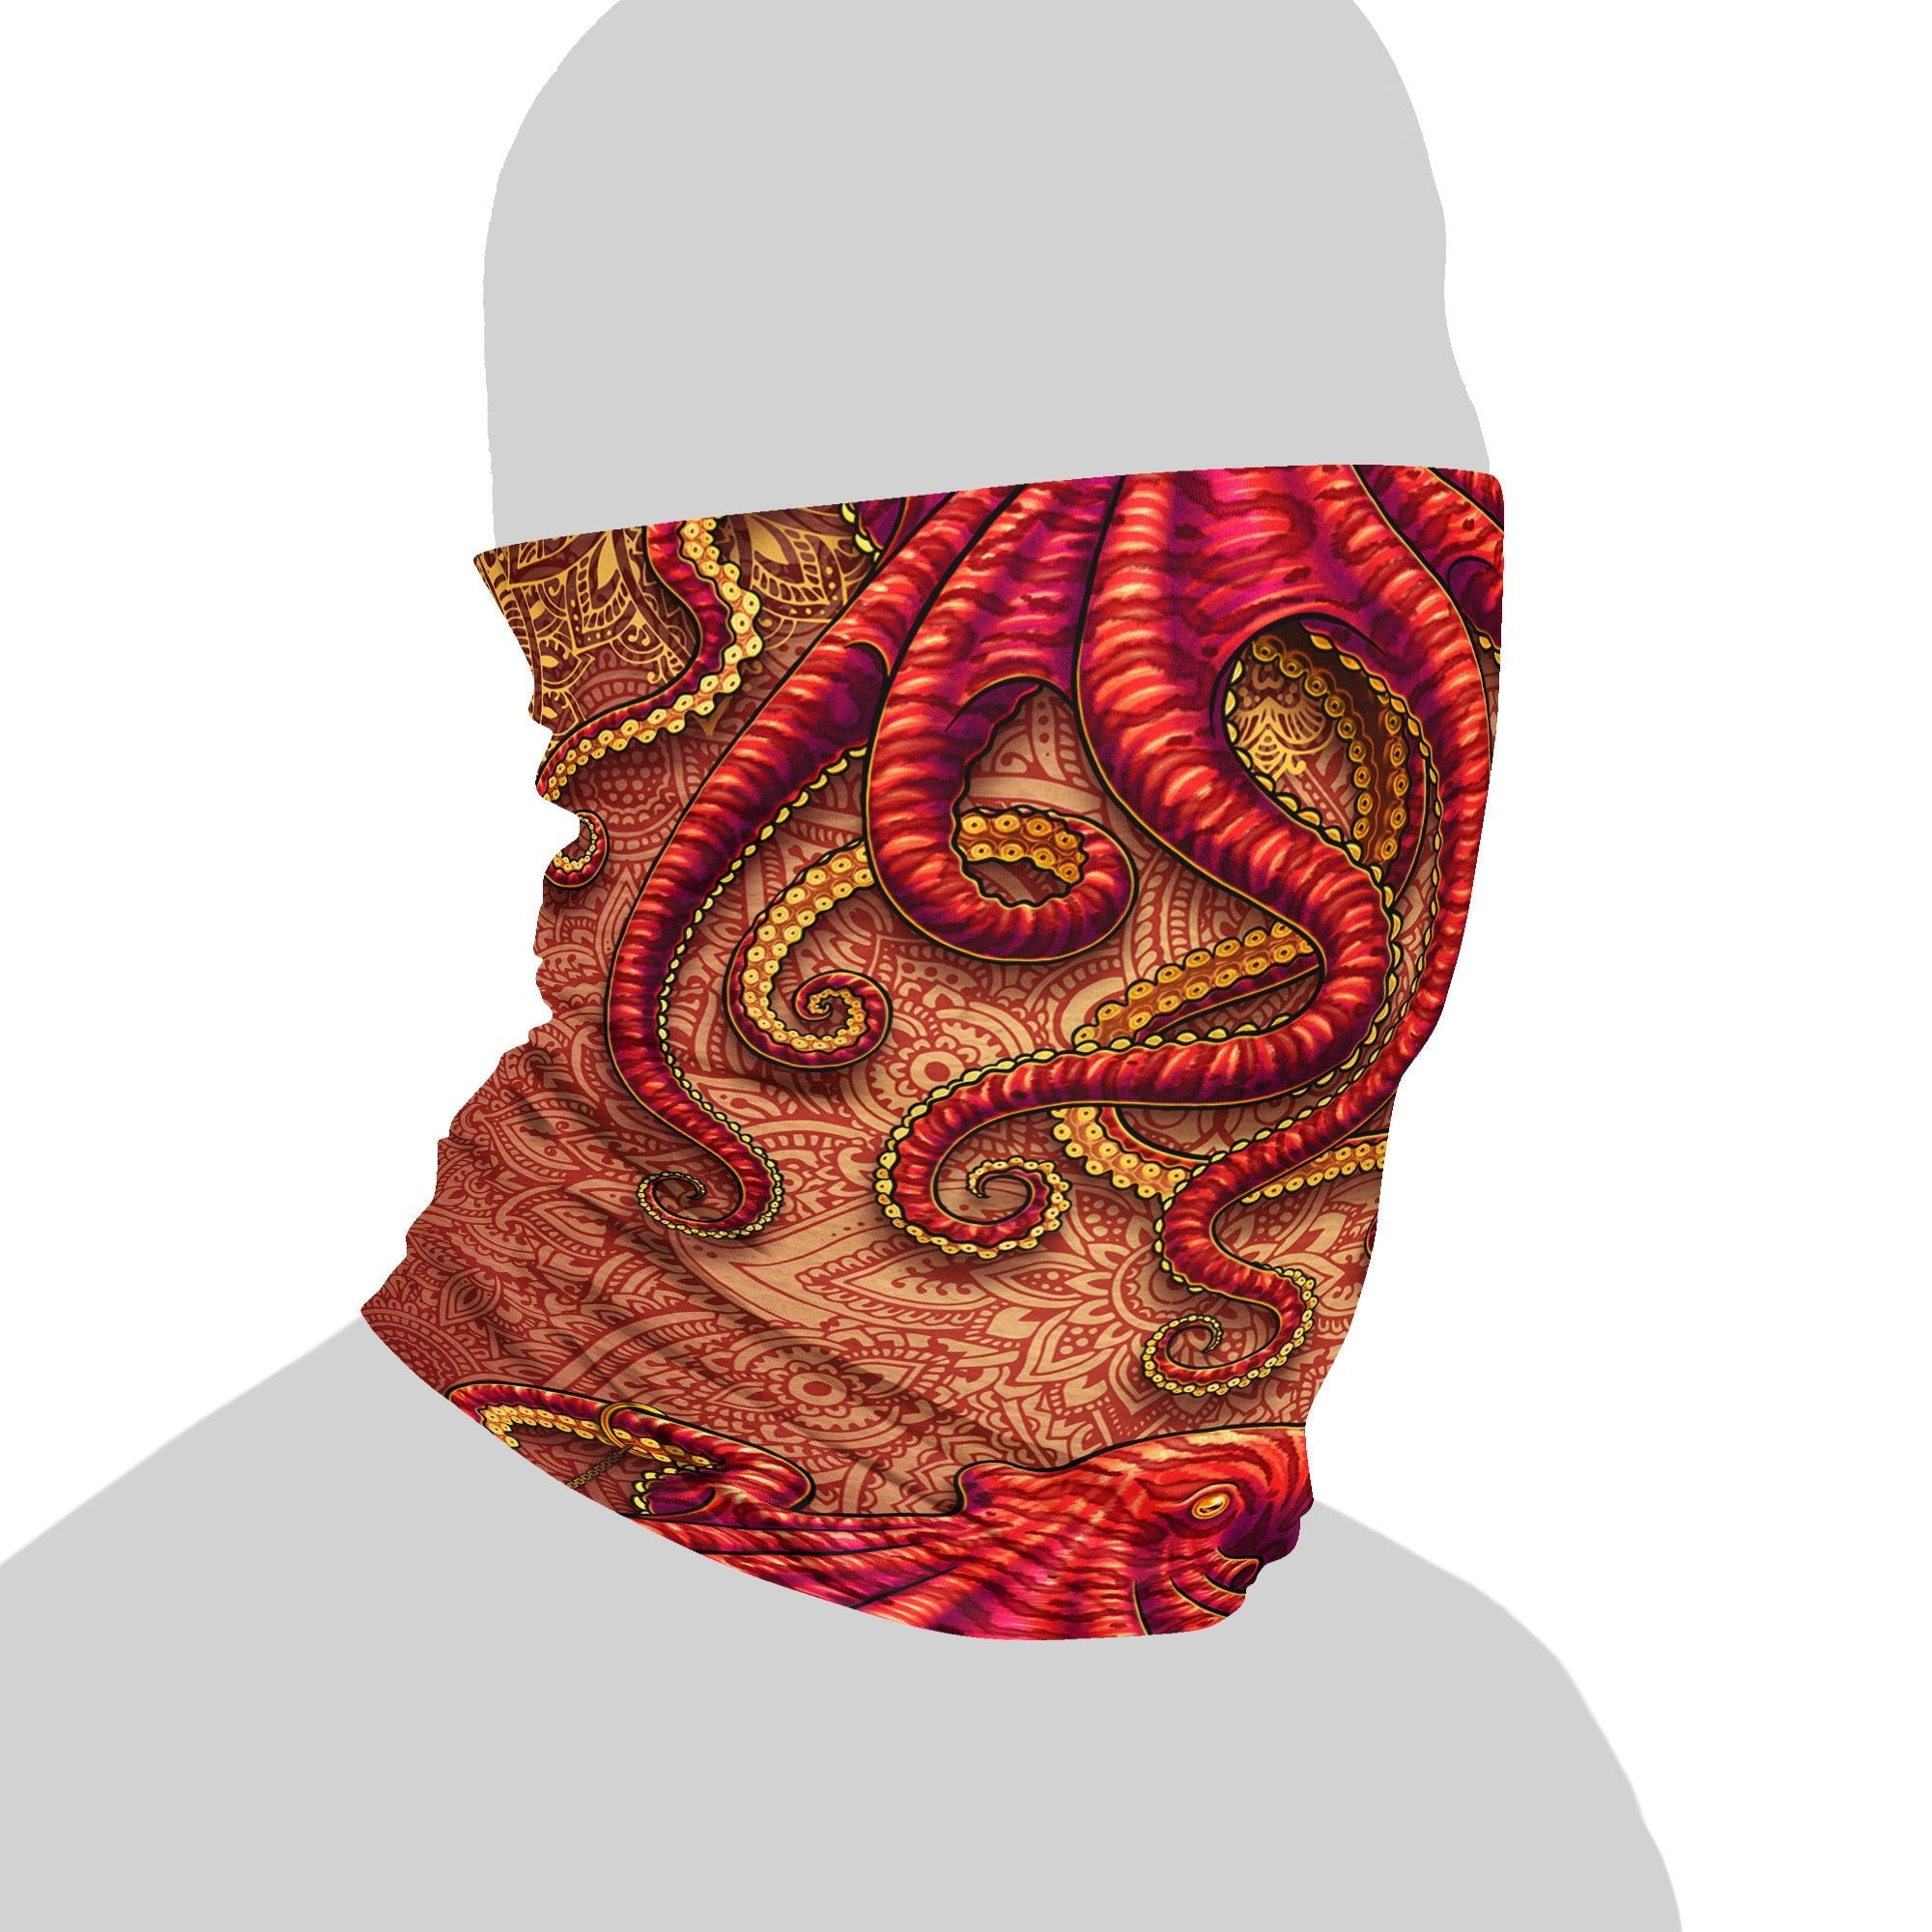 Tentacles Neck Gaiter, Face Mask, Head Covering, Octopus Art - Boho, Mandalas - Abysm Internal